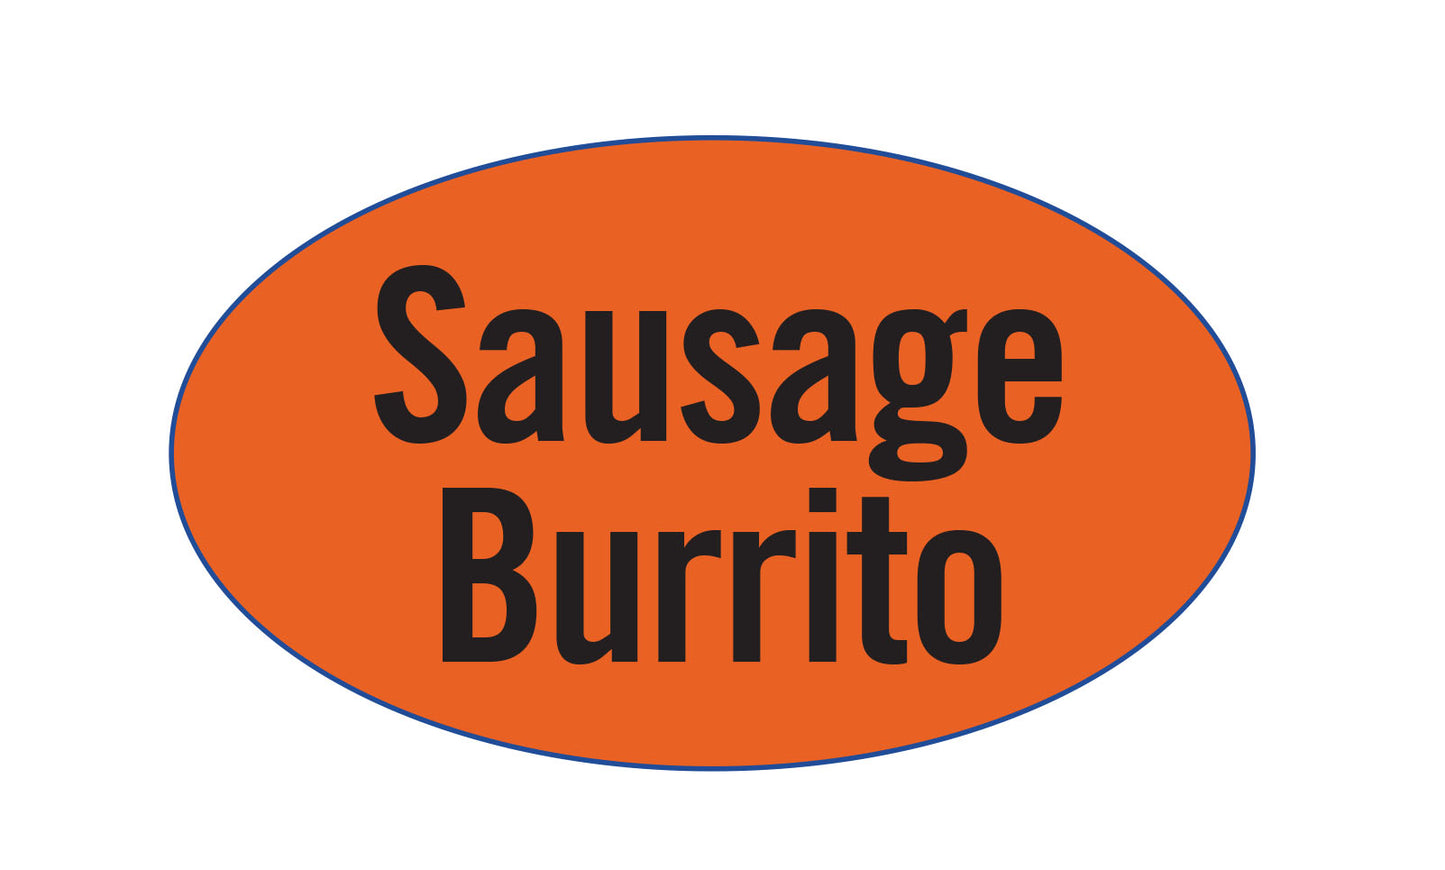 Sausage Burrito